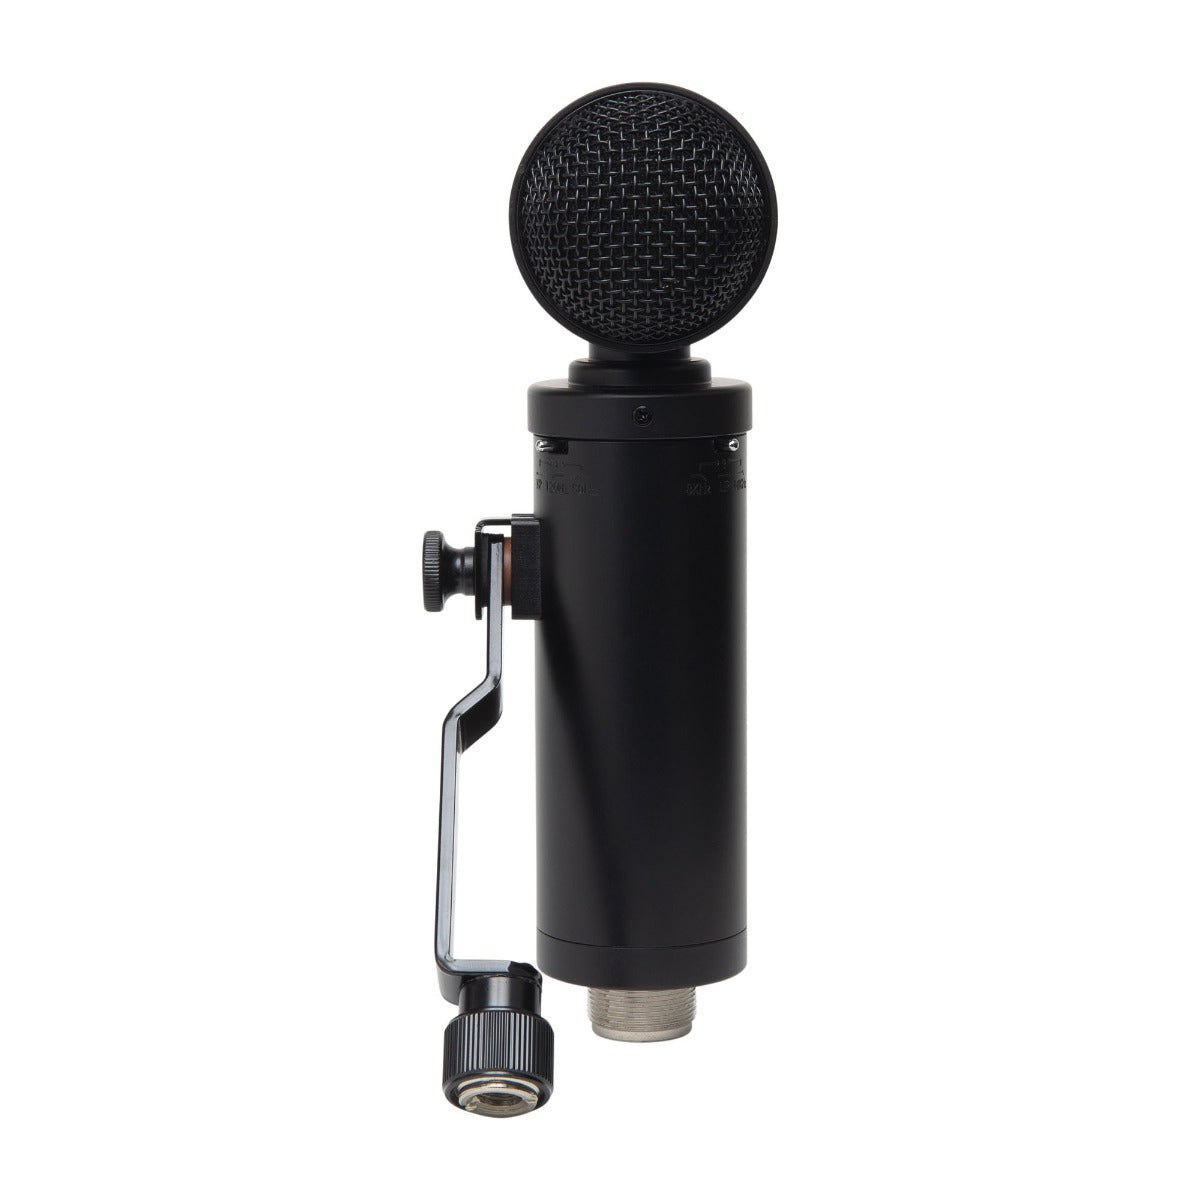 Lauten Audio LS-308 Instrument Condenser Microphone, View 2